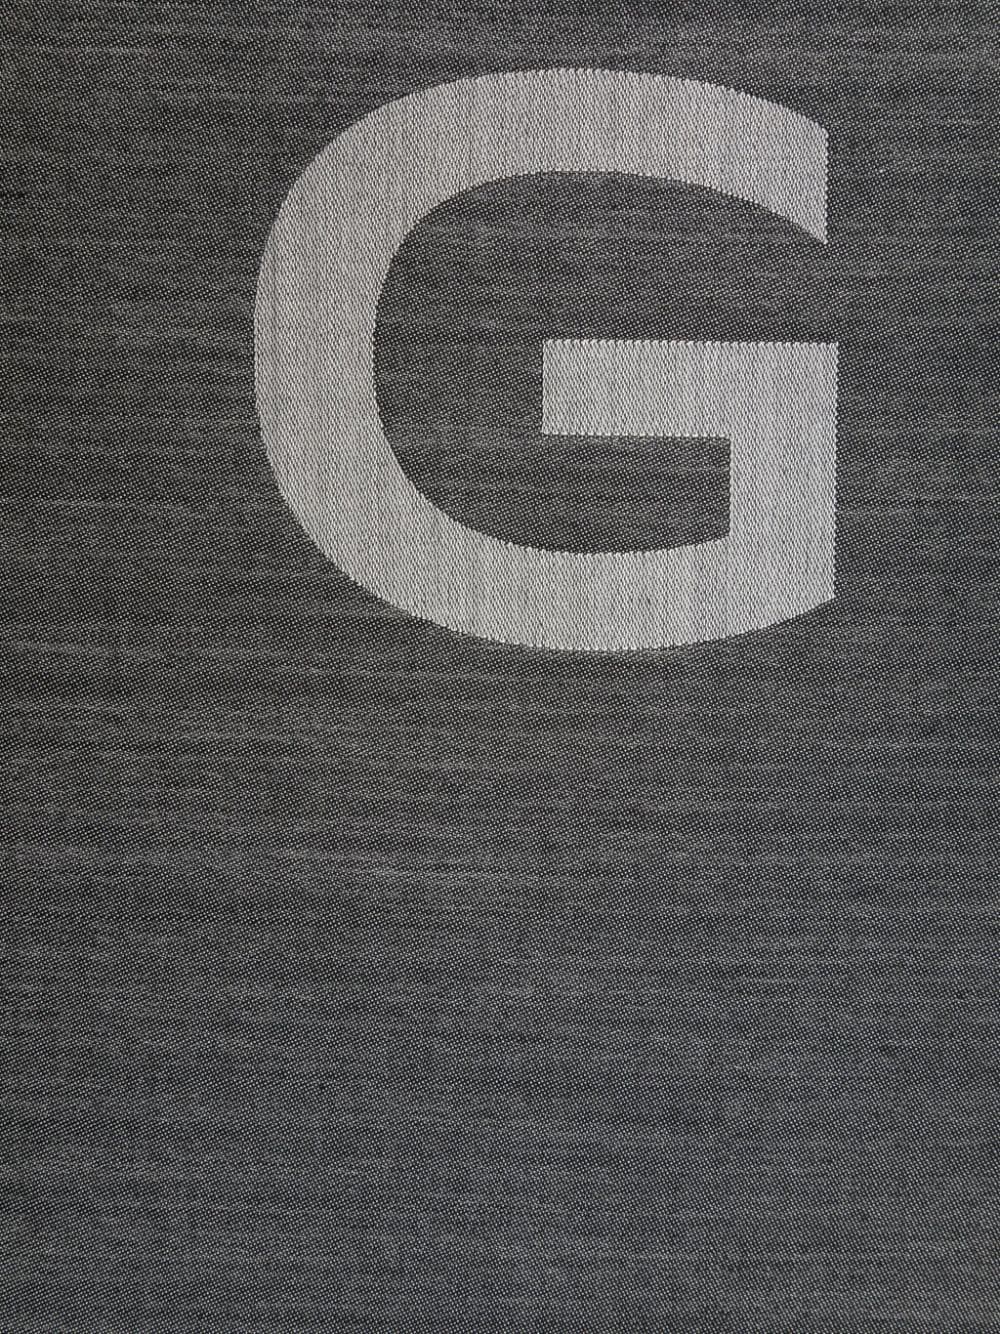 Givenchy Logo-Jacquard Wool Scarf